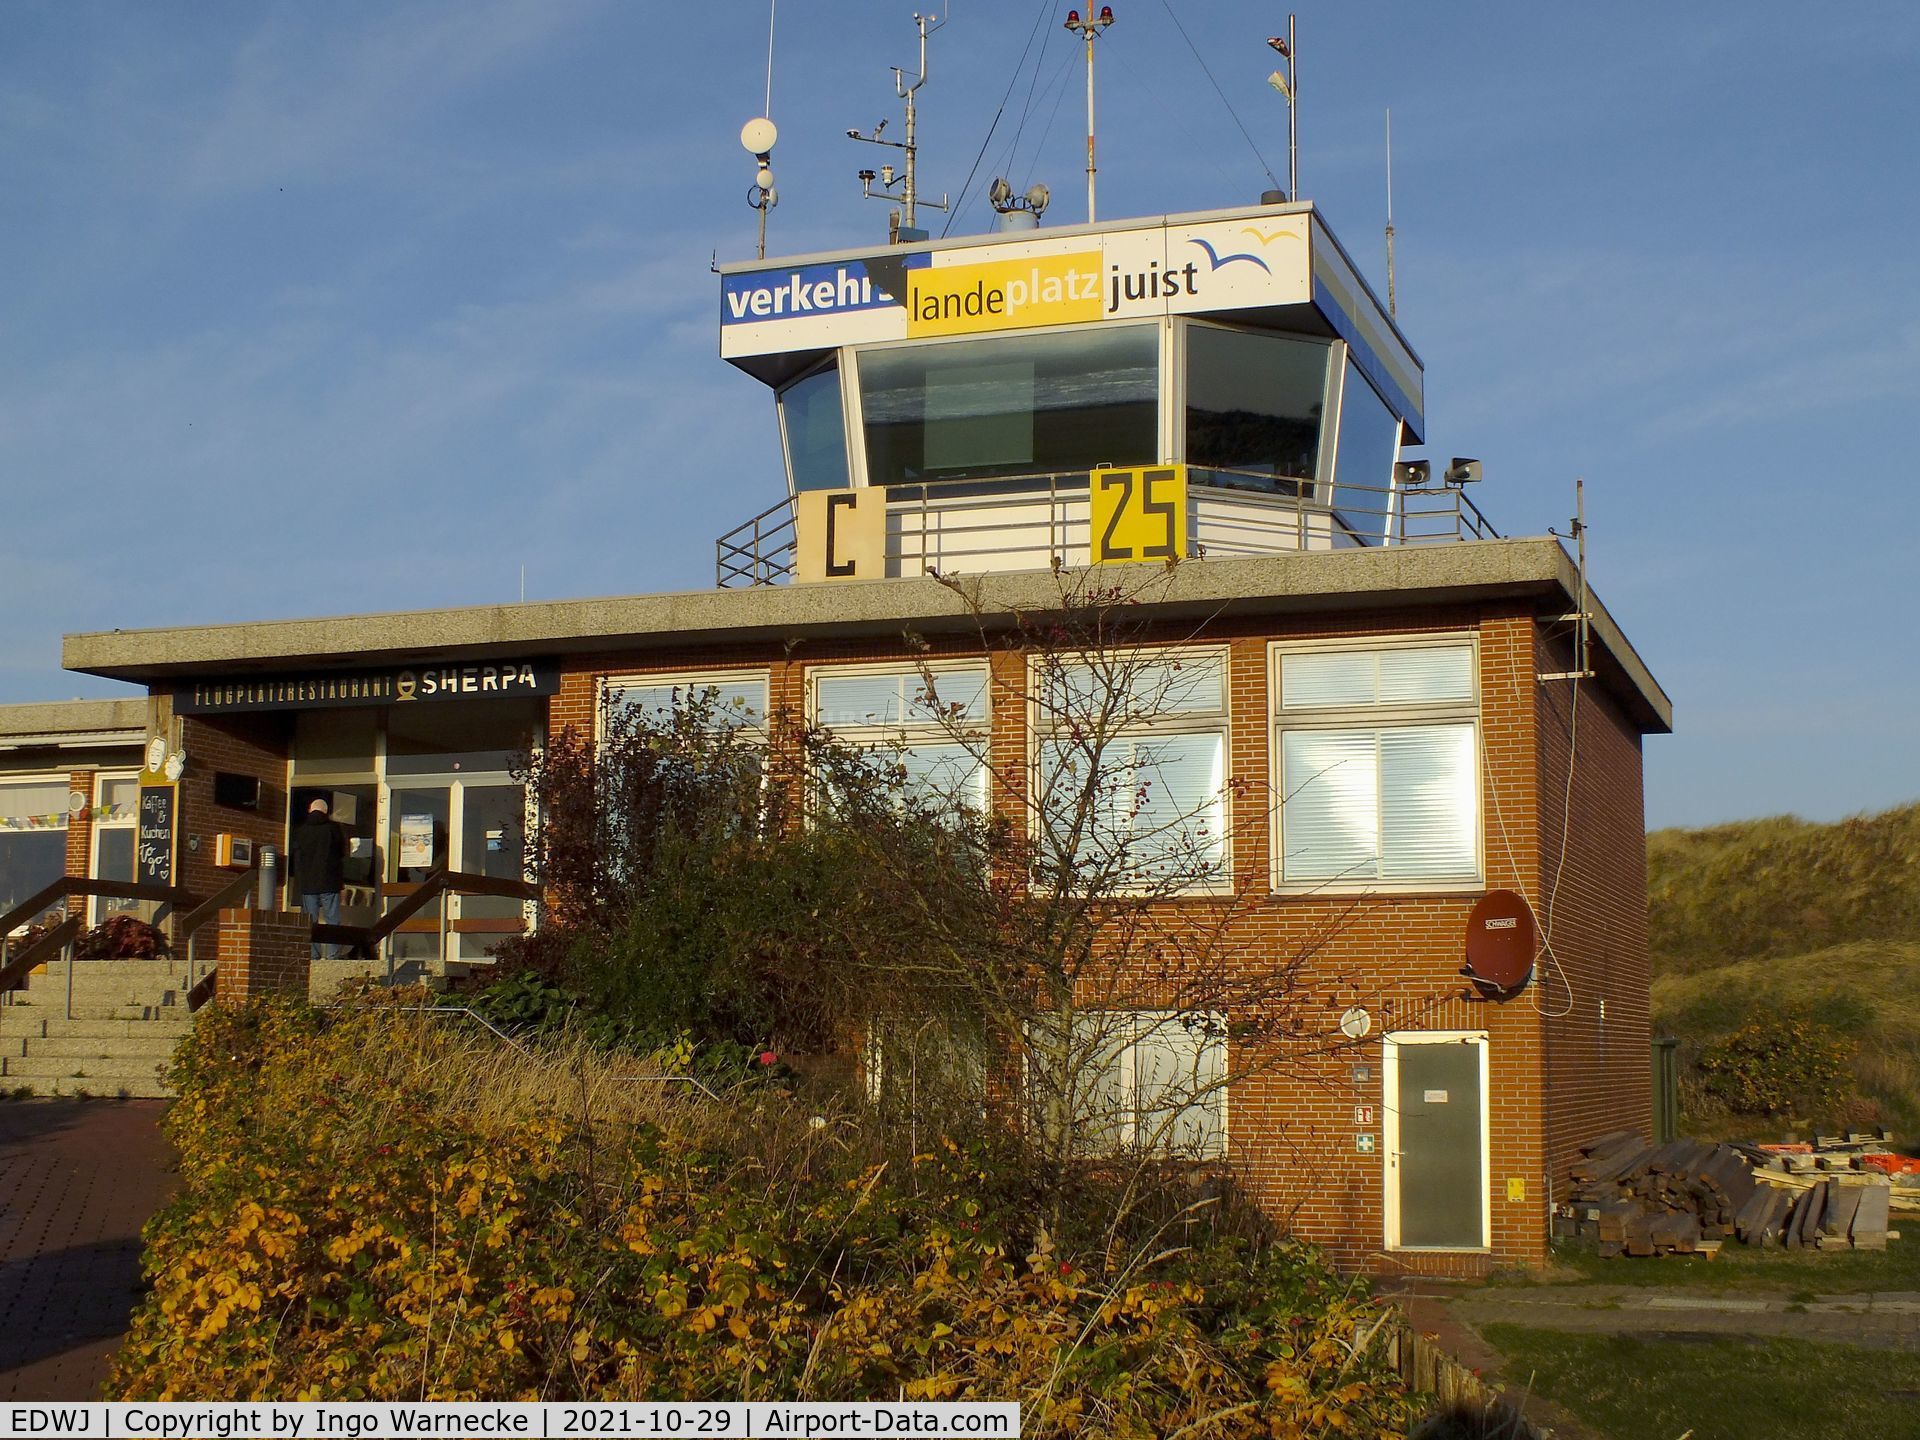 Juist Airport, Juist Germany (EDWJ) - tower at Juist airfield